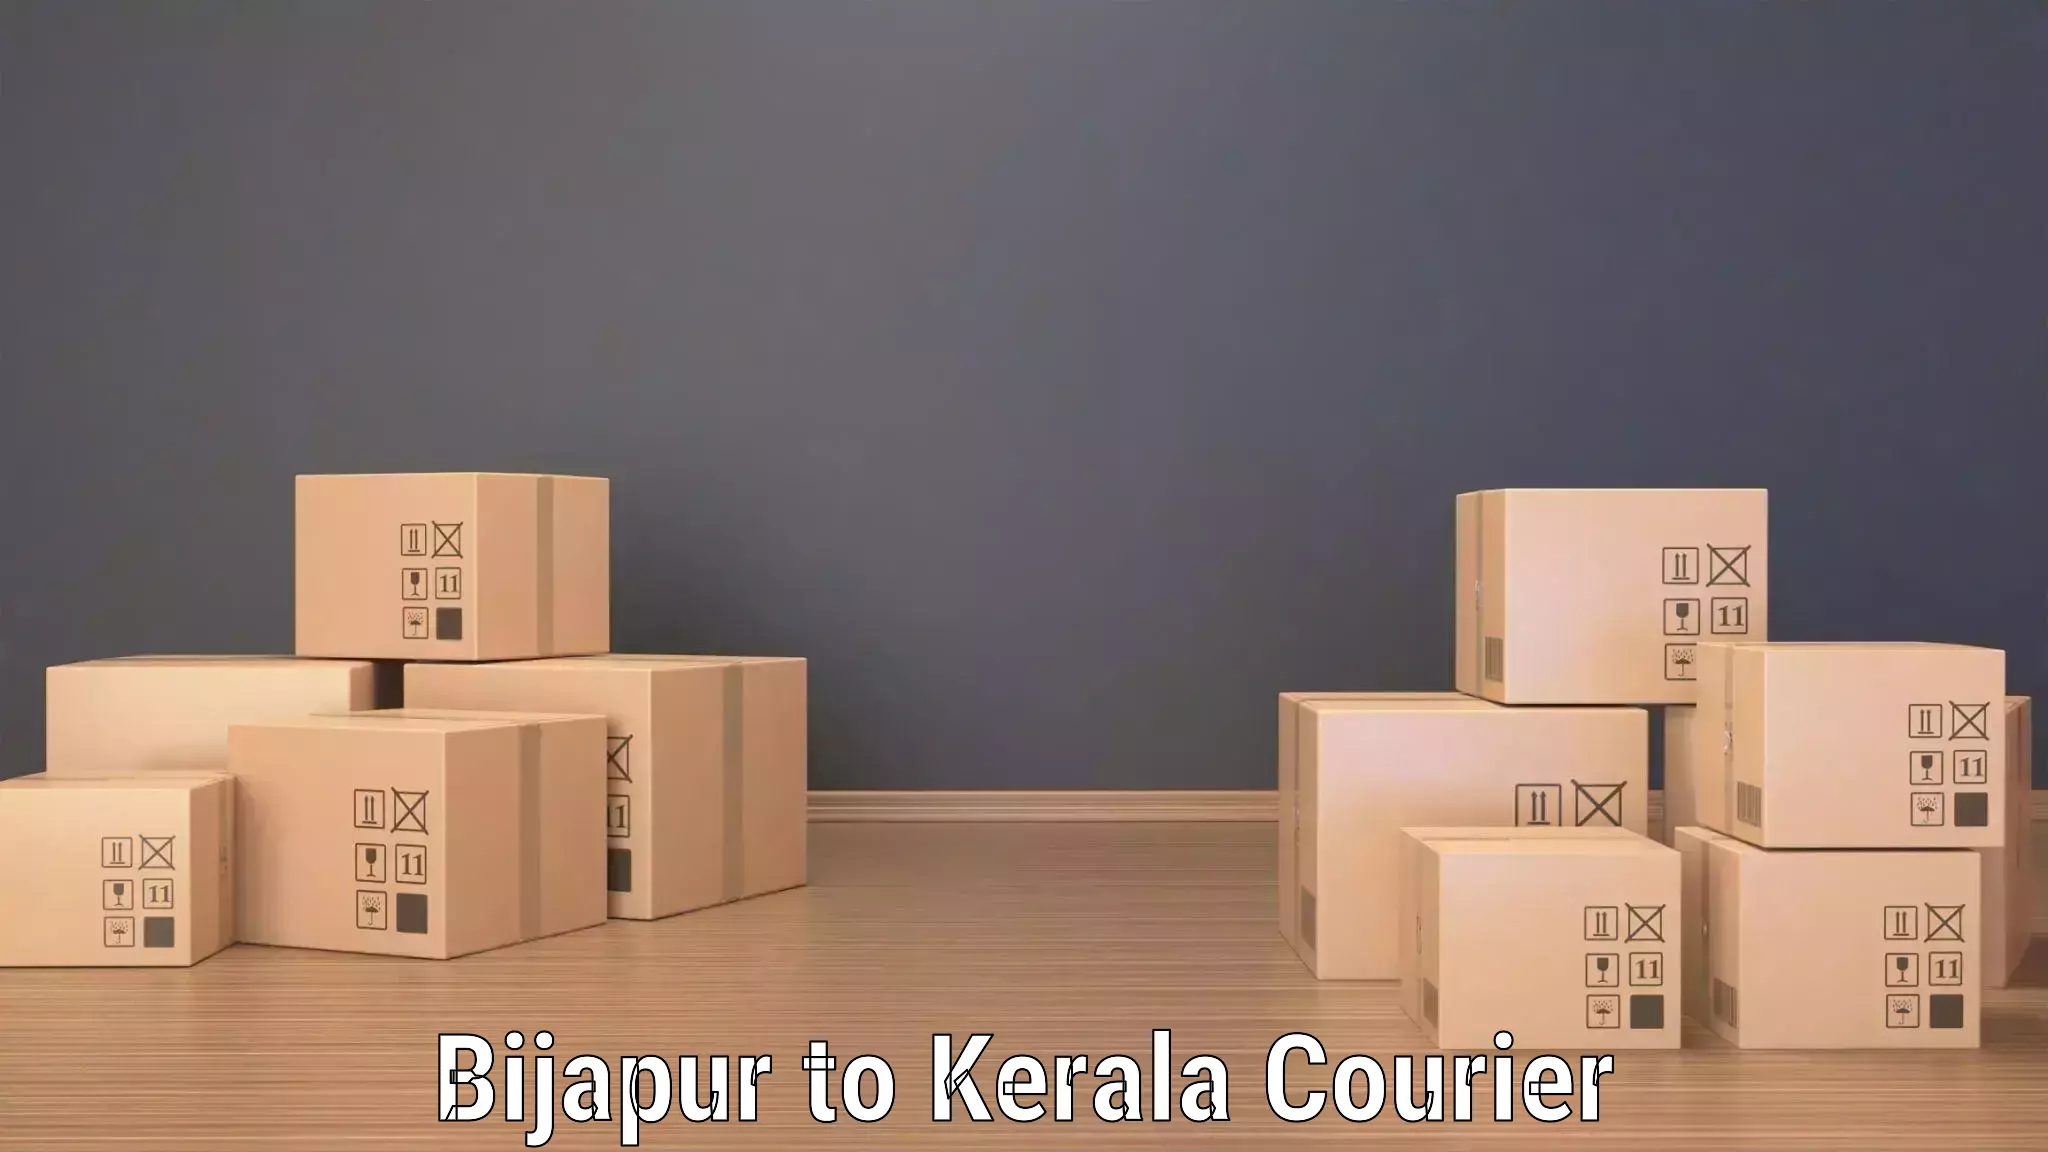 Express delivery capabilities Bijapur to Kattappana